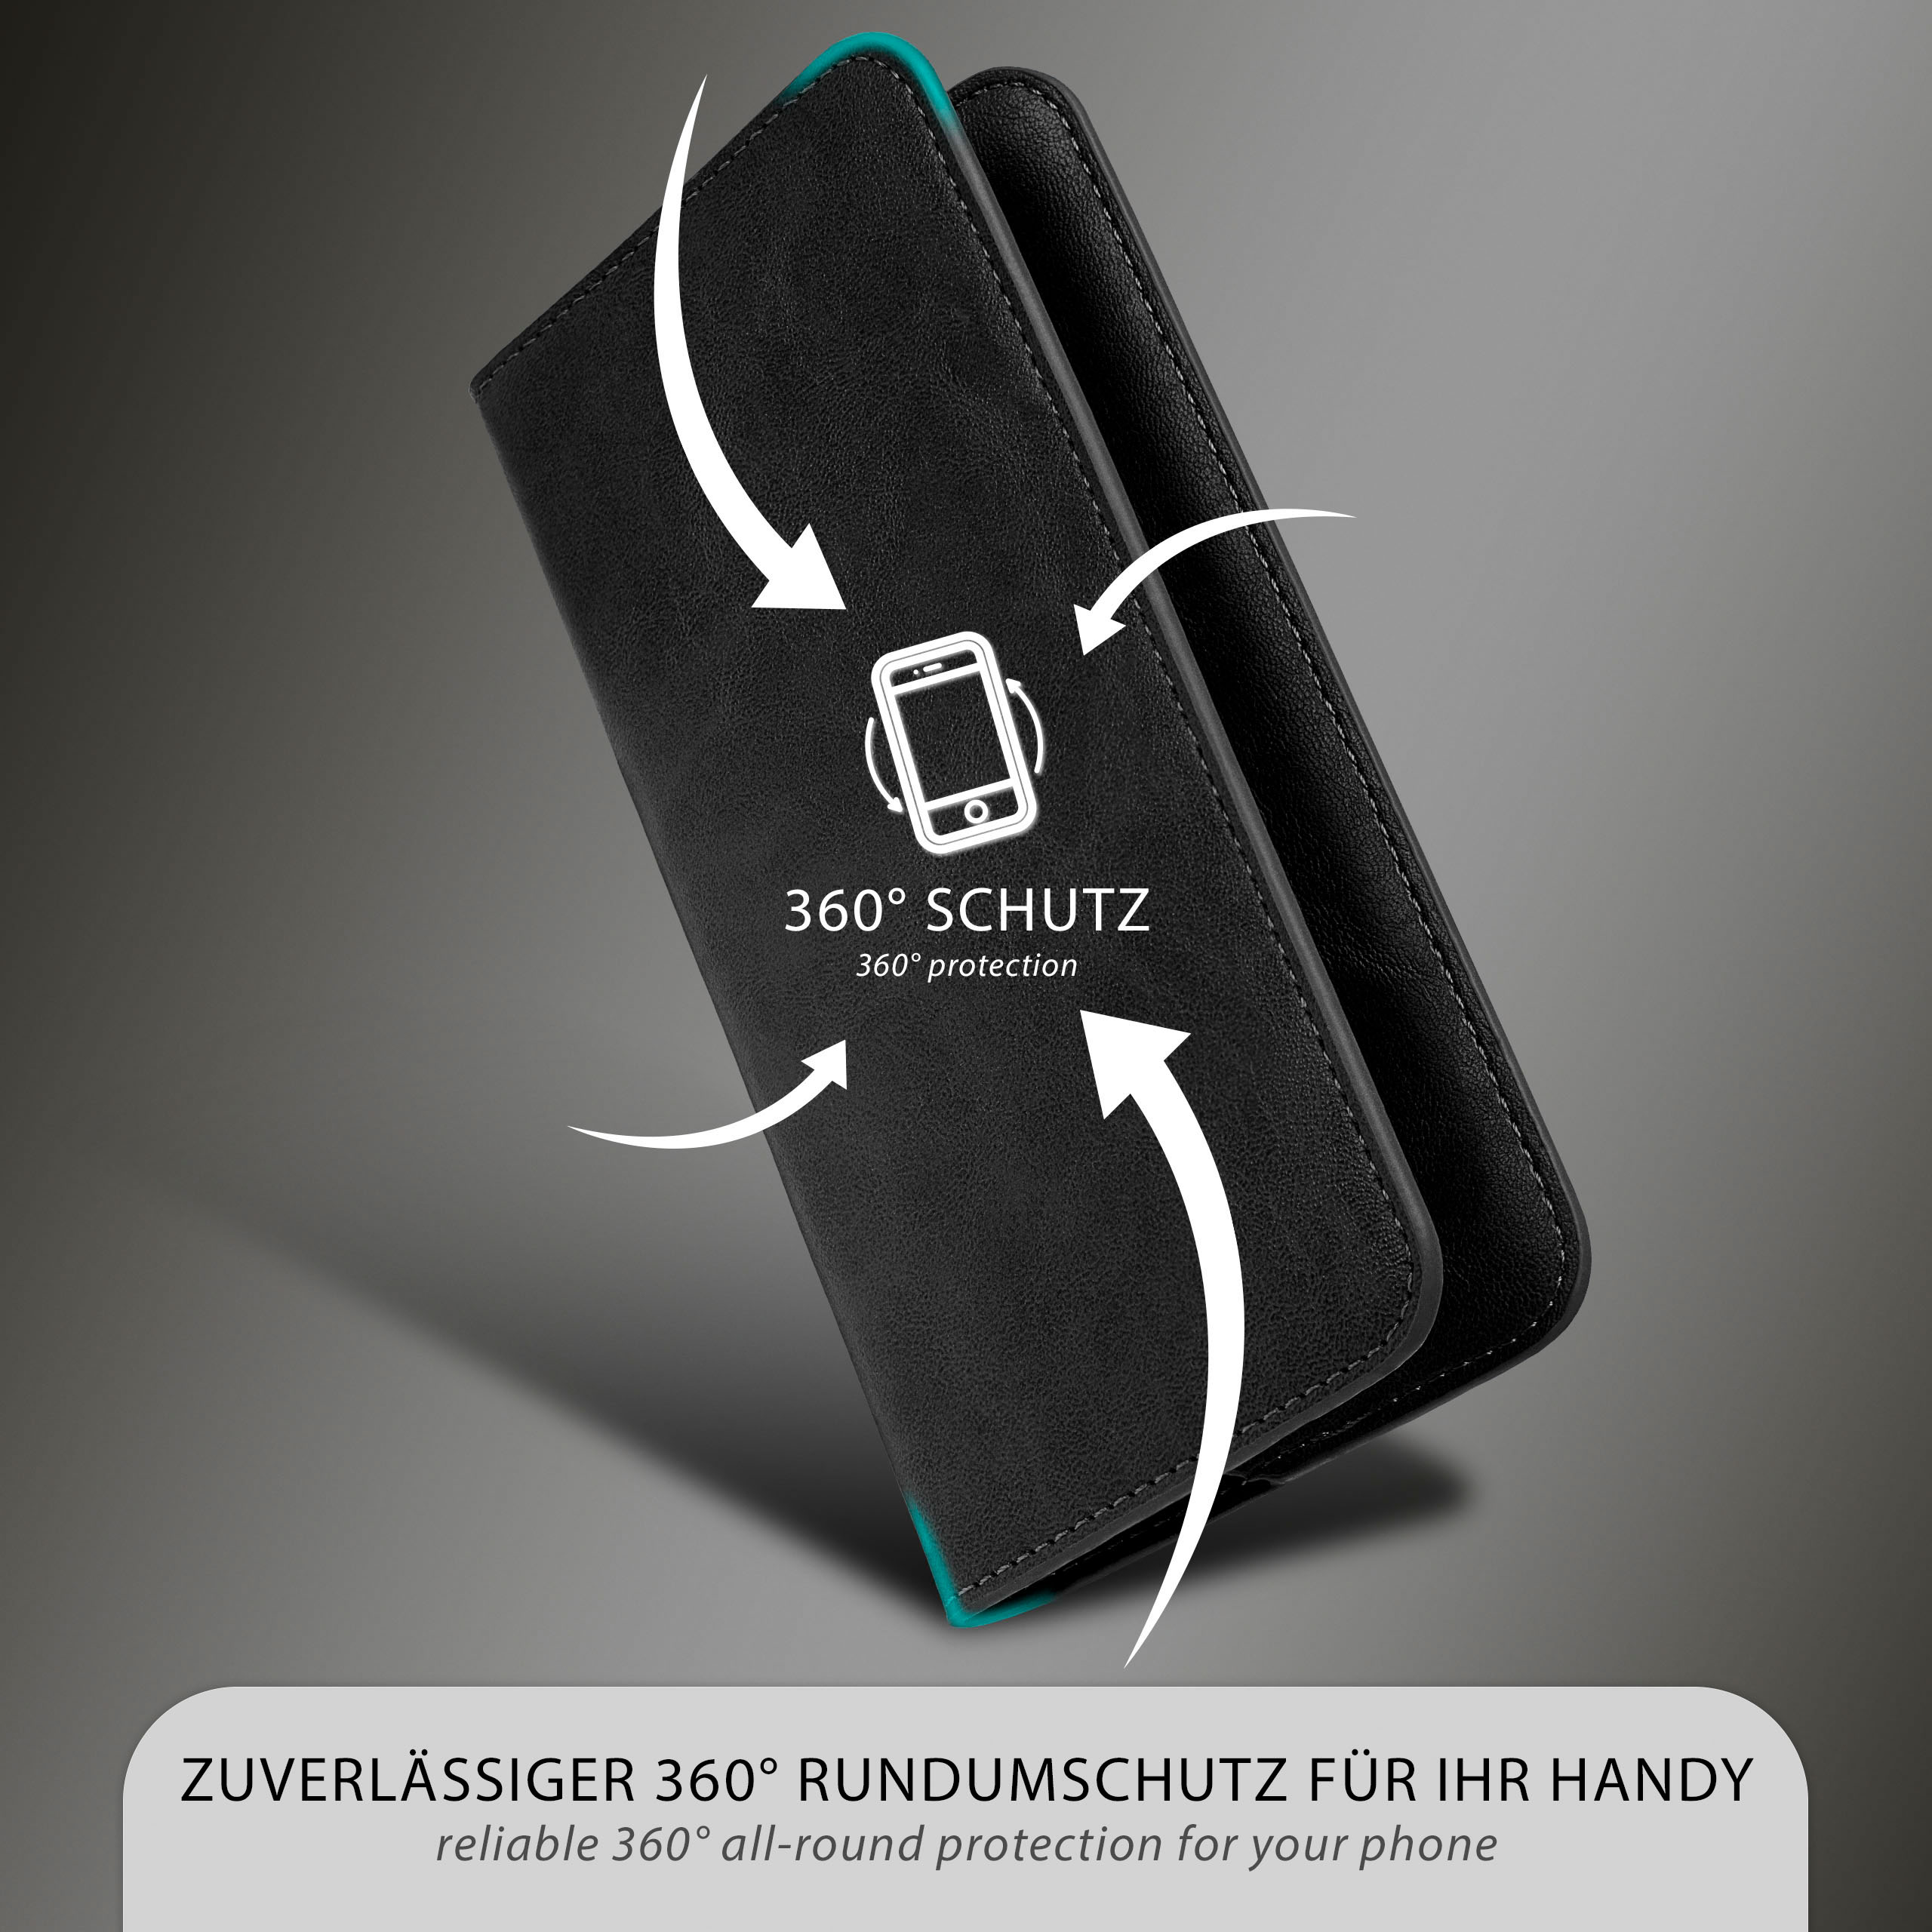 Case, FE Cover, / Flip Galaxy 5G, S20 MOEX FE Samsung, Purse Schwarz